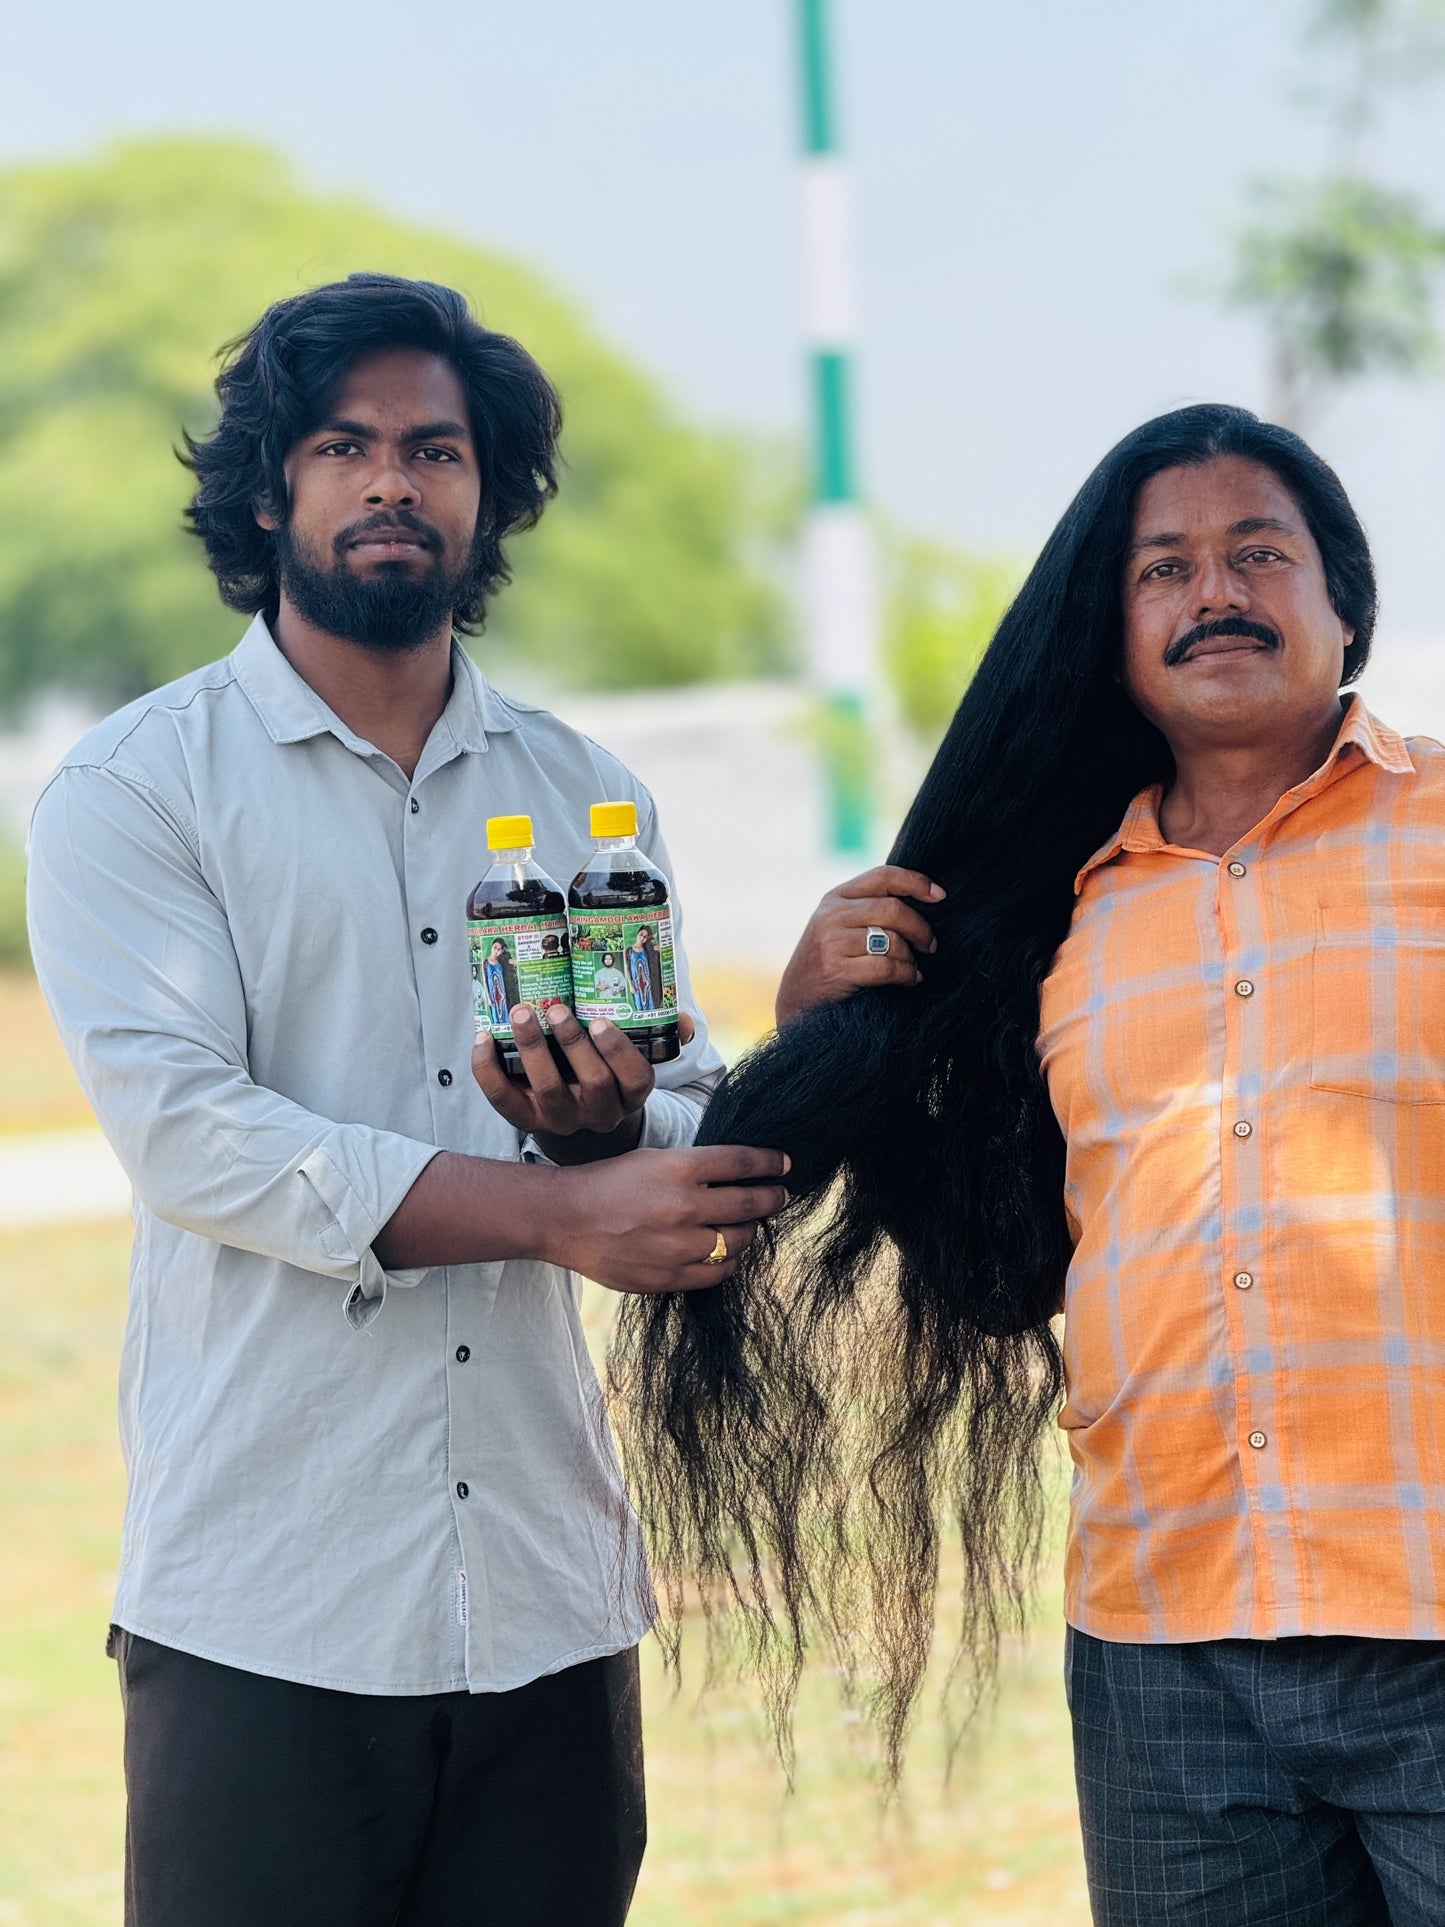 Adivasi Krithika 100% Pure Ayurvedic Herbal Hair Oil🌿